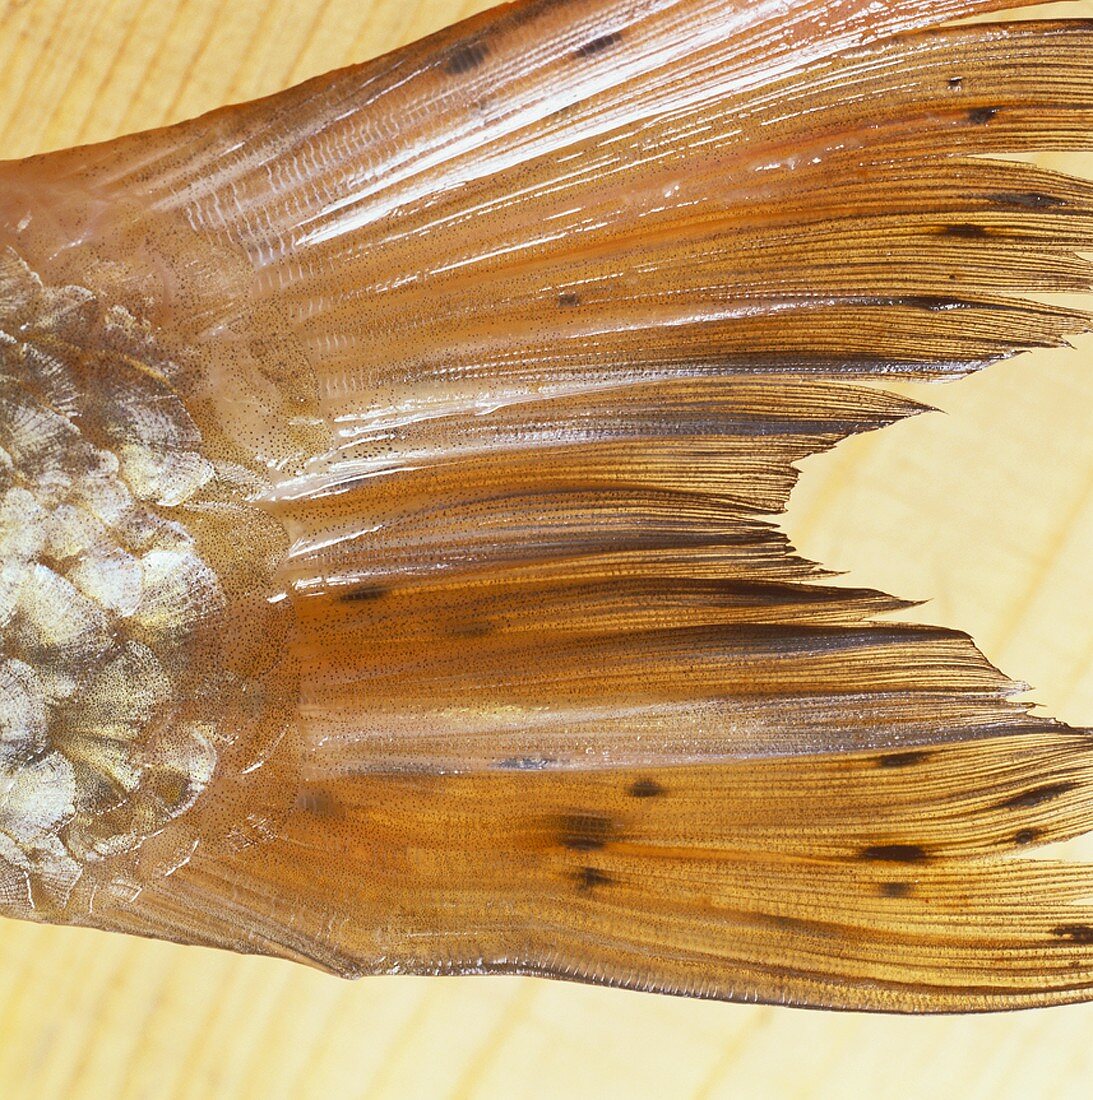 Fish tail, close-up